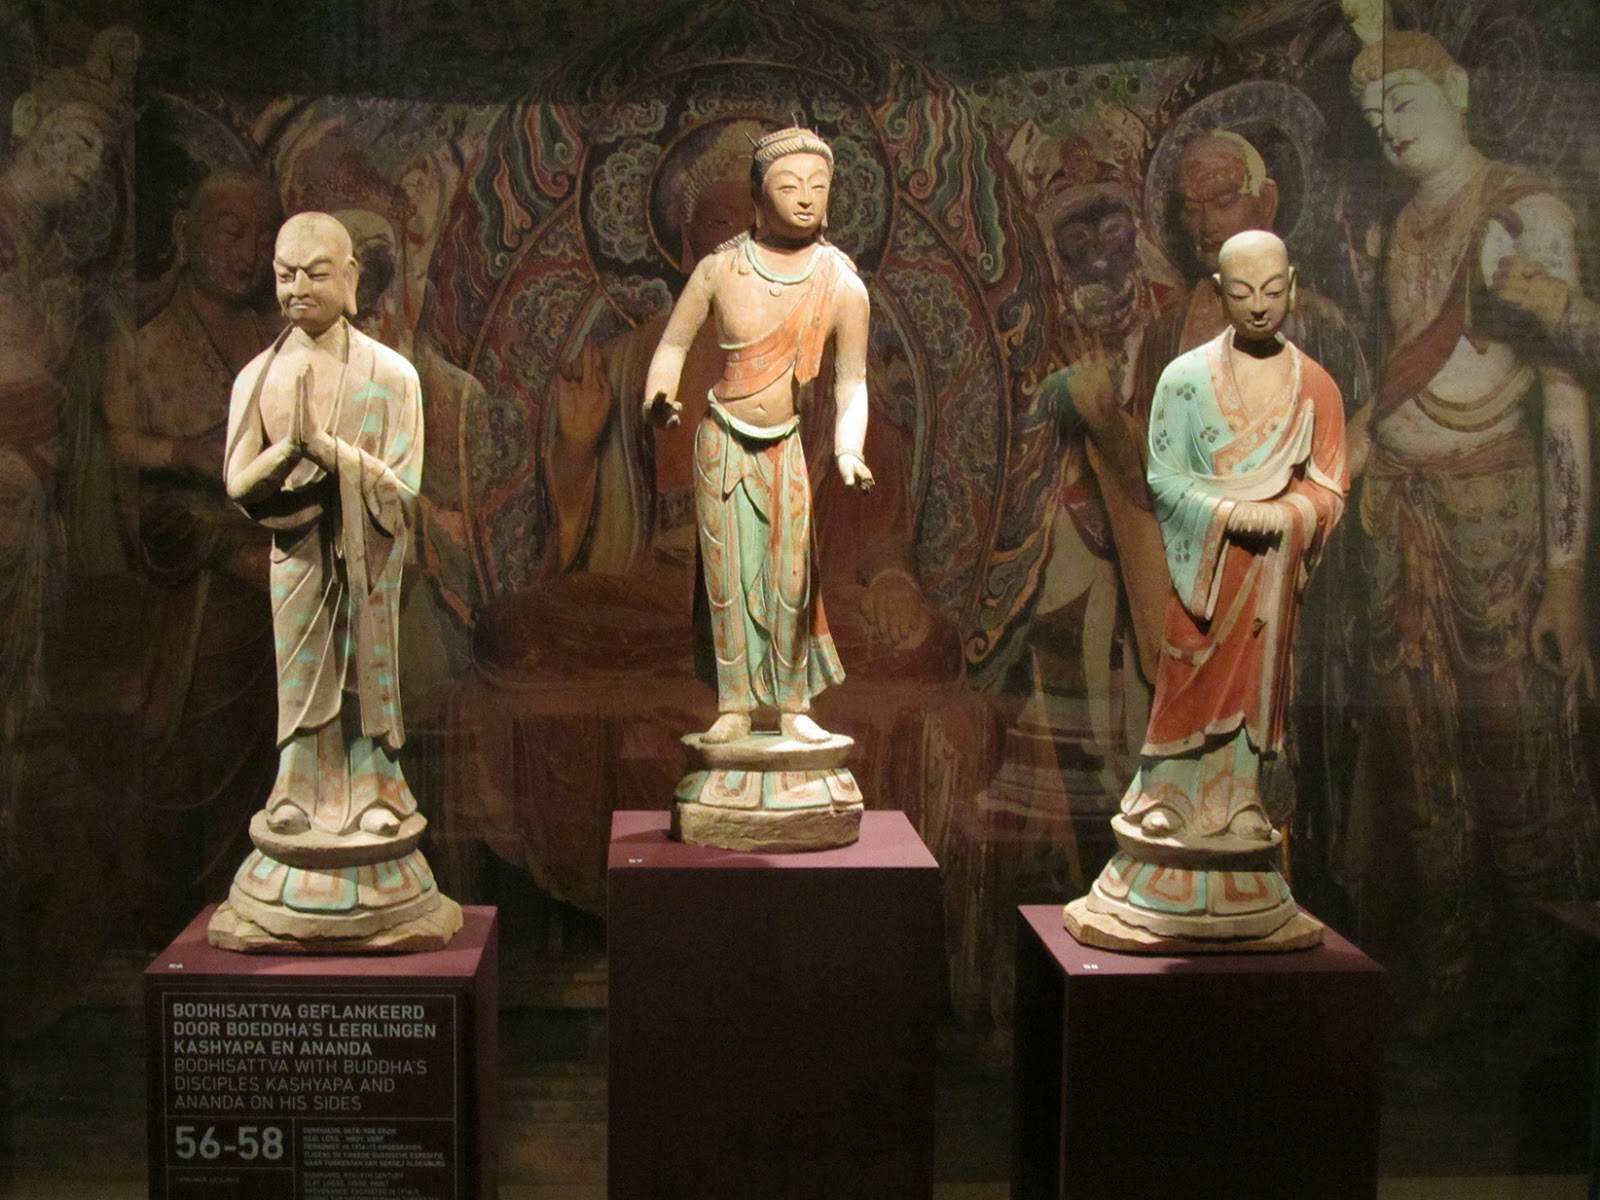 boddhisatva with buddhas disciples Kashyapa and Ananda on his sides